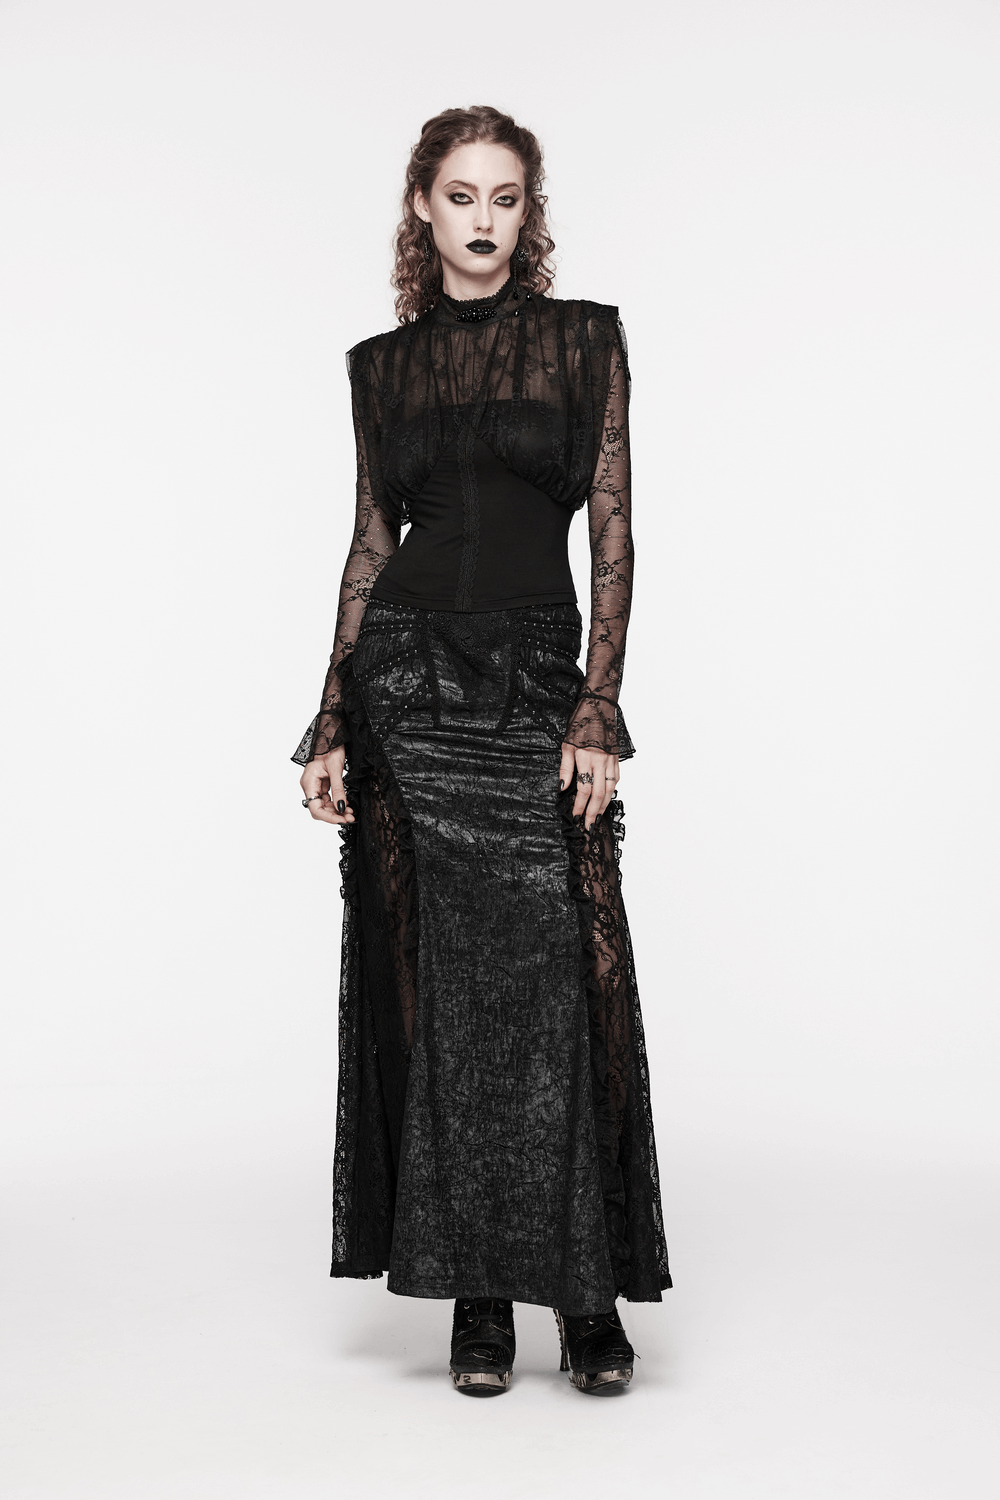 Elegant Female Sheer Black Lace Top with Long Sleeves